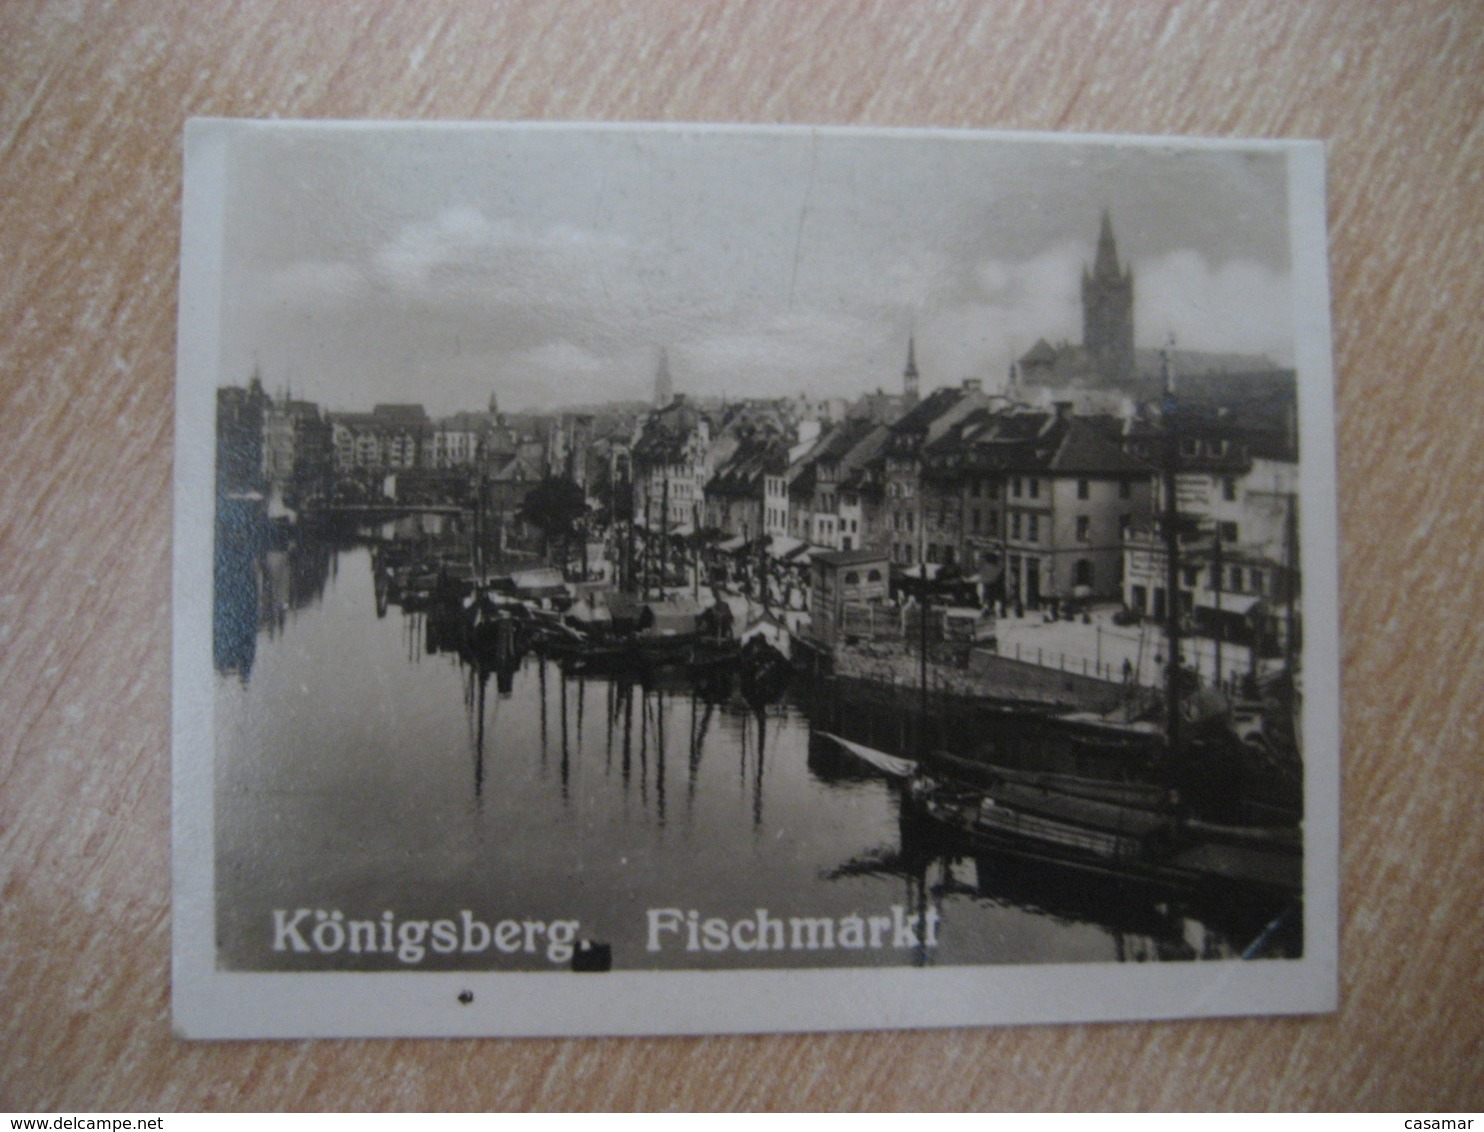 KONIGSBERG Fischmarkt Fish Fishing Bilder Card Photo Photography (4x5,2cm) Ostpreusen East Prussia GERMANY 30s Tobacco - Non Classificati